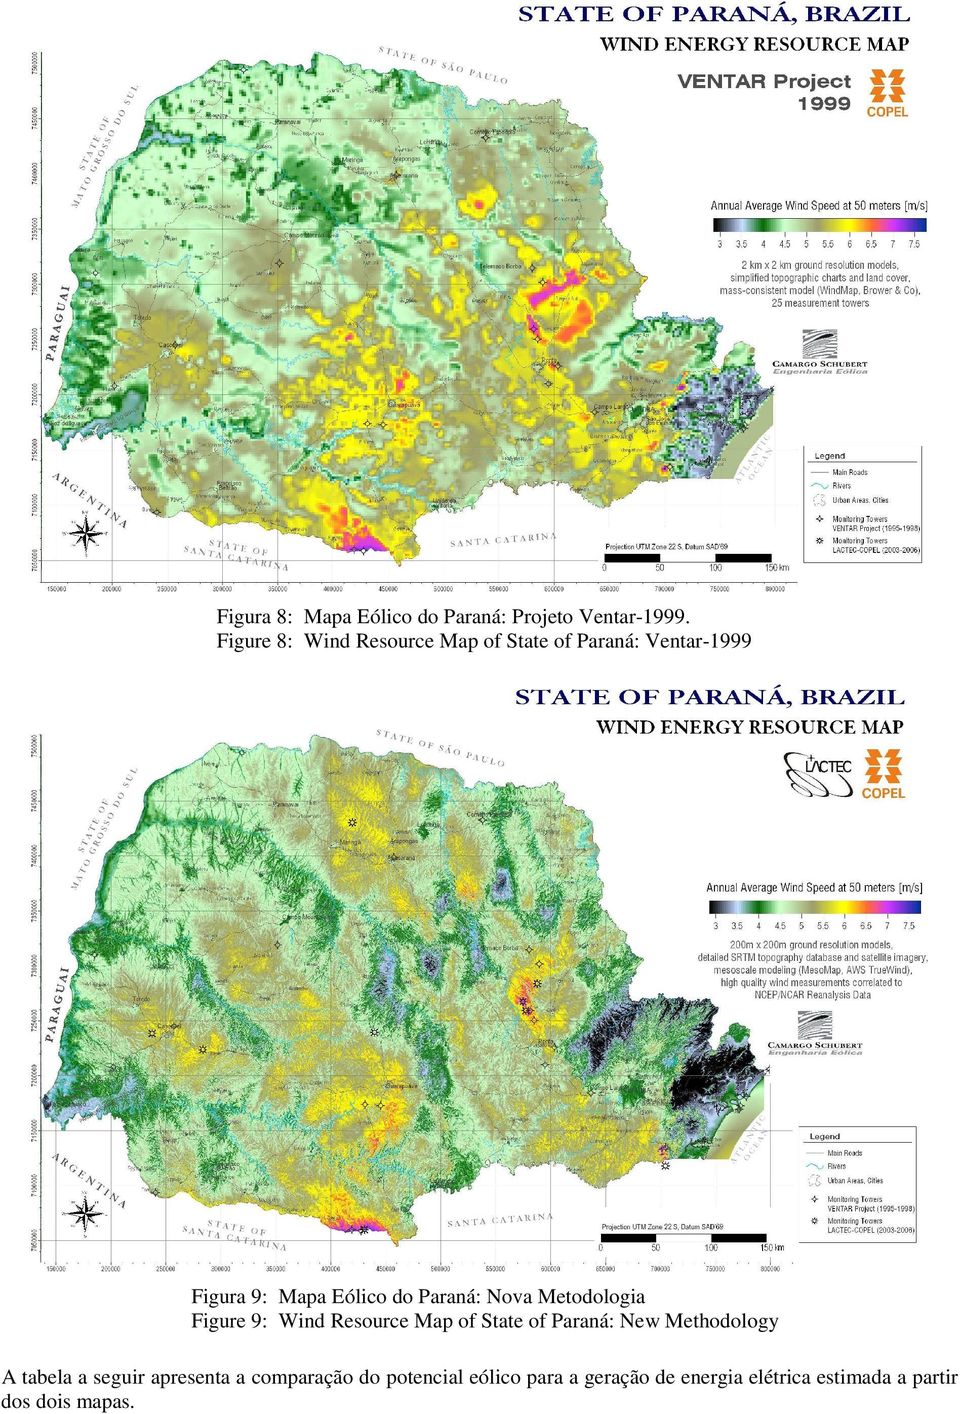 Paraná: Nova Metodologia Figure 9: Wind Resource Map of State of Paraná: New Methodology